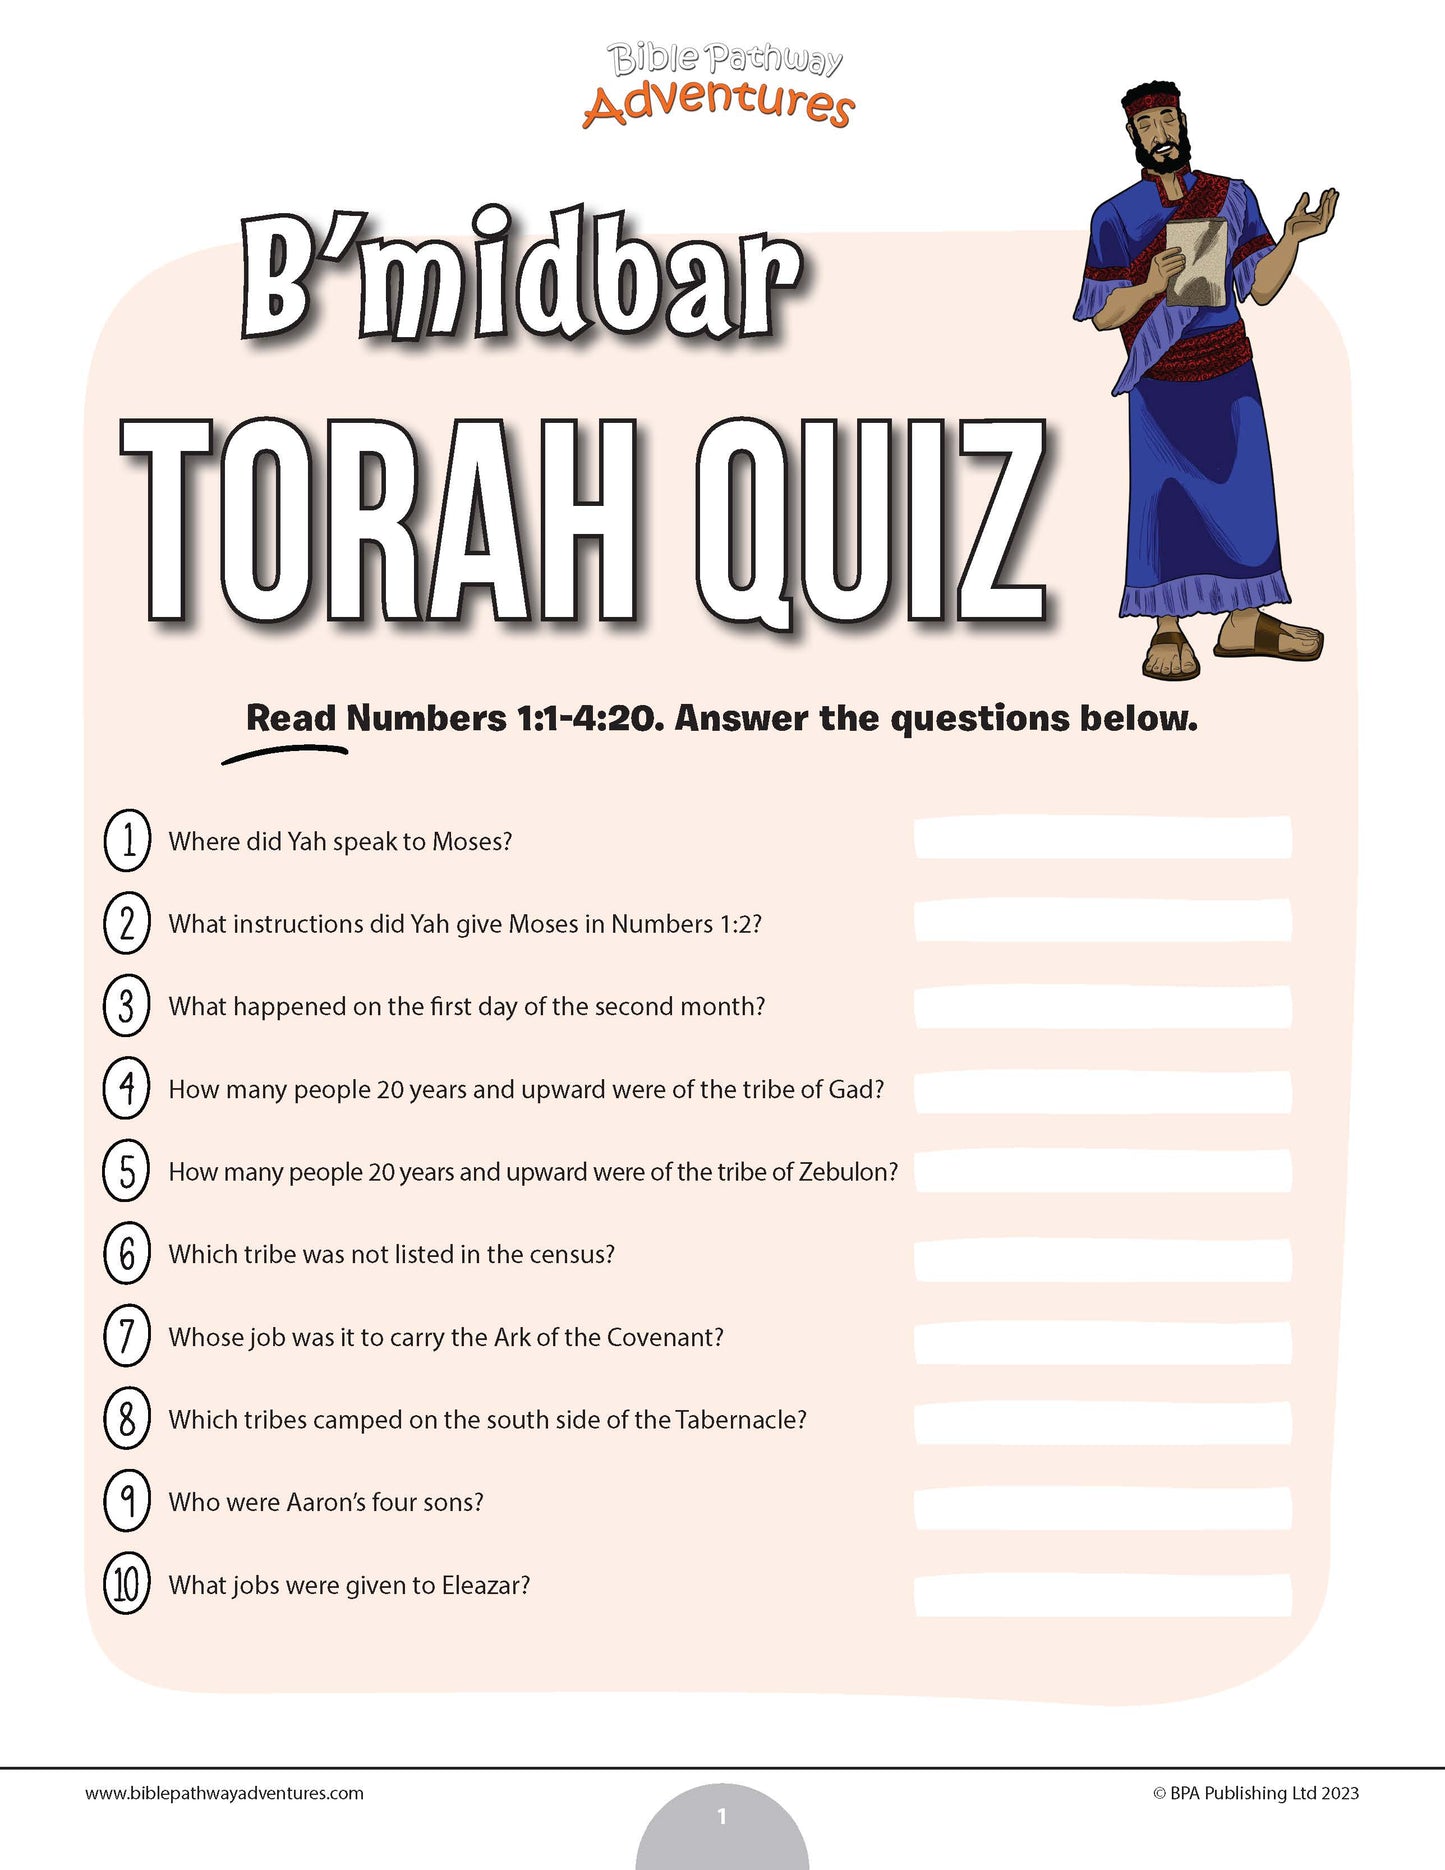 B’midbar Torah quiz